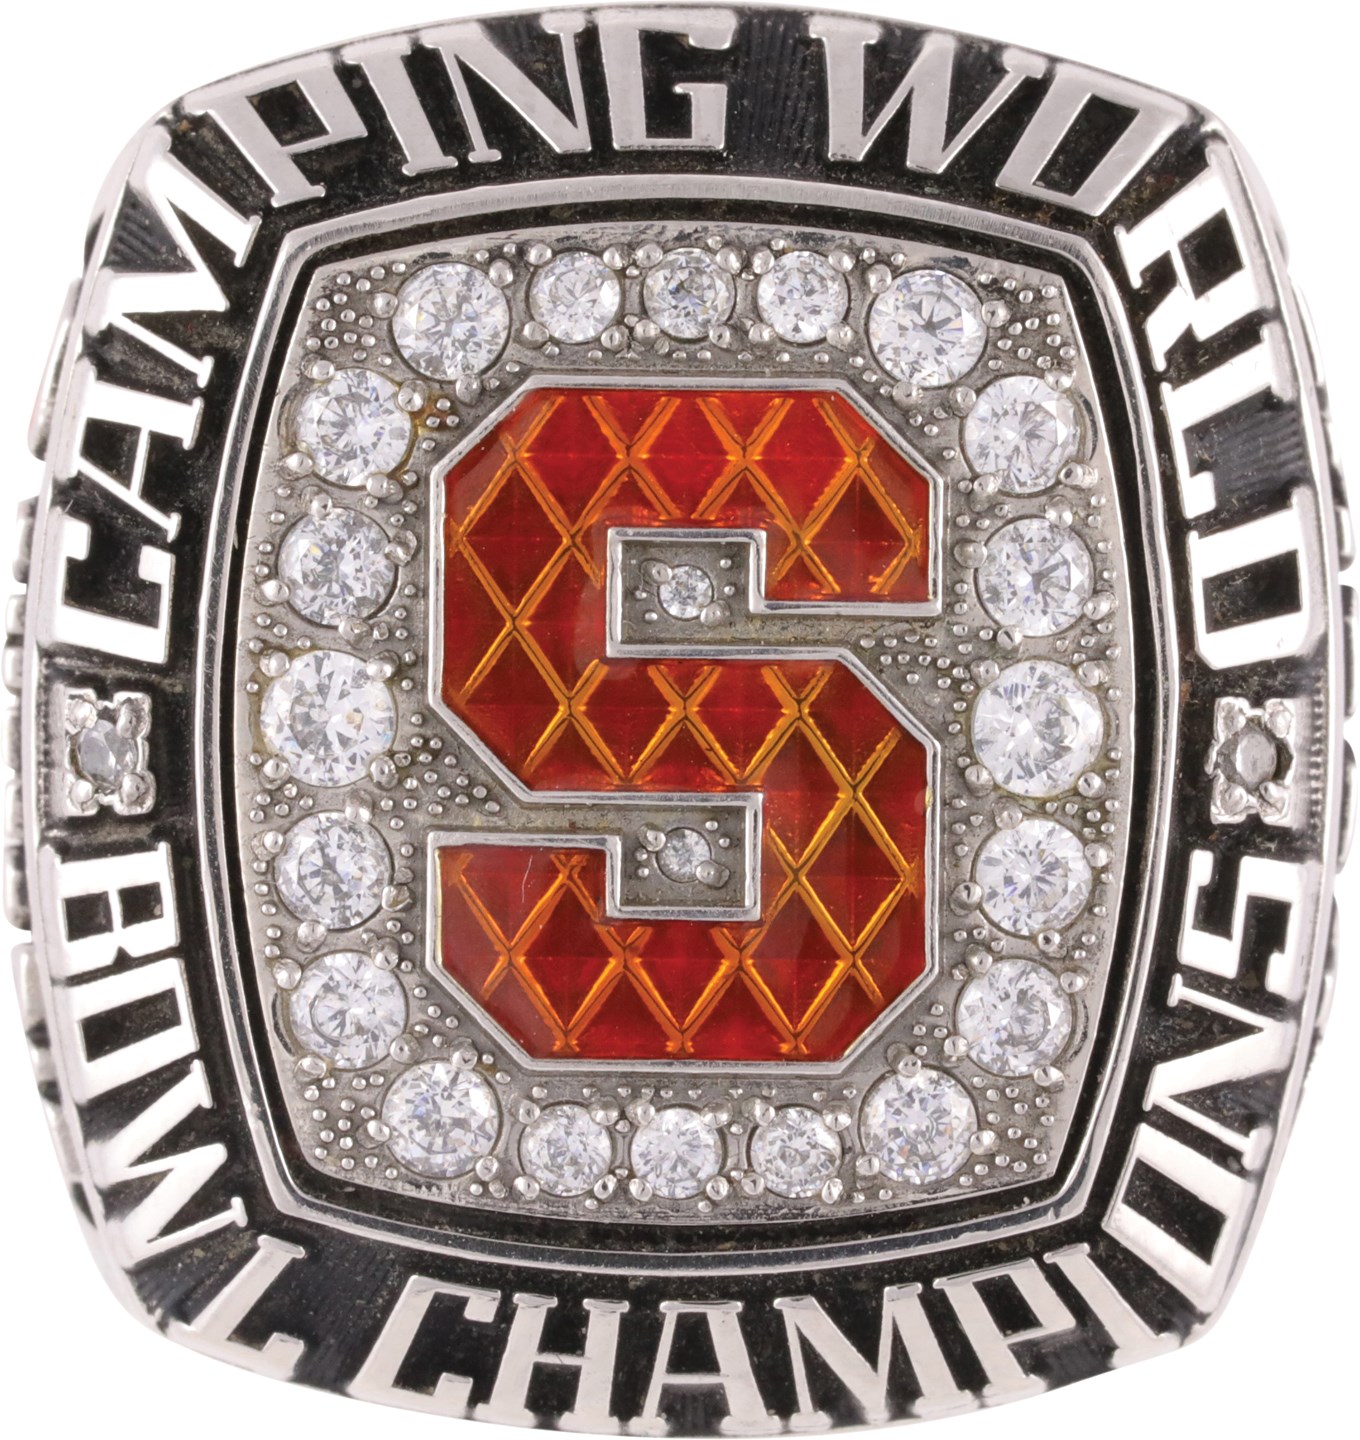 - 2018 Syracuse Orange NCAA Football "Camping World Bowl" Championship Player Ring